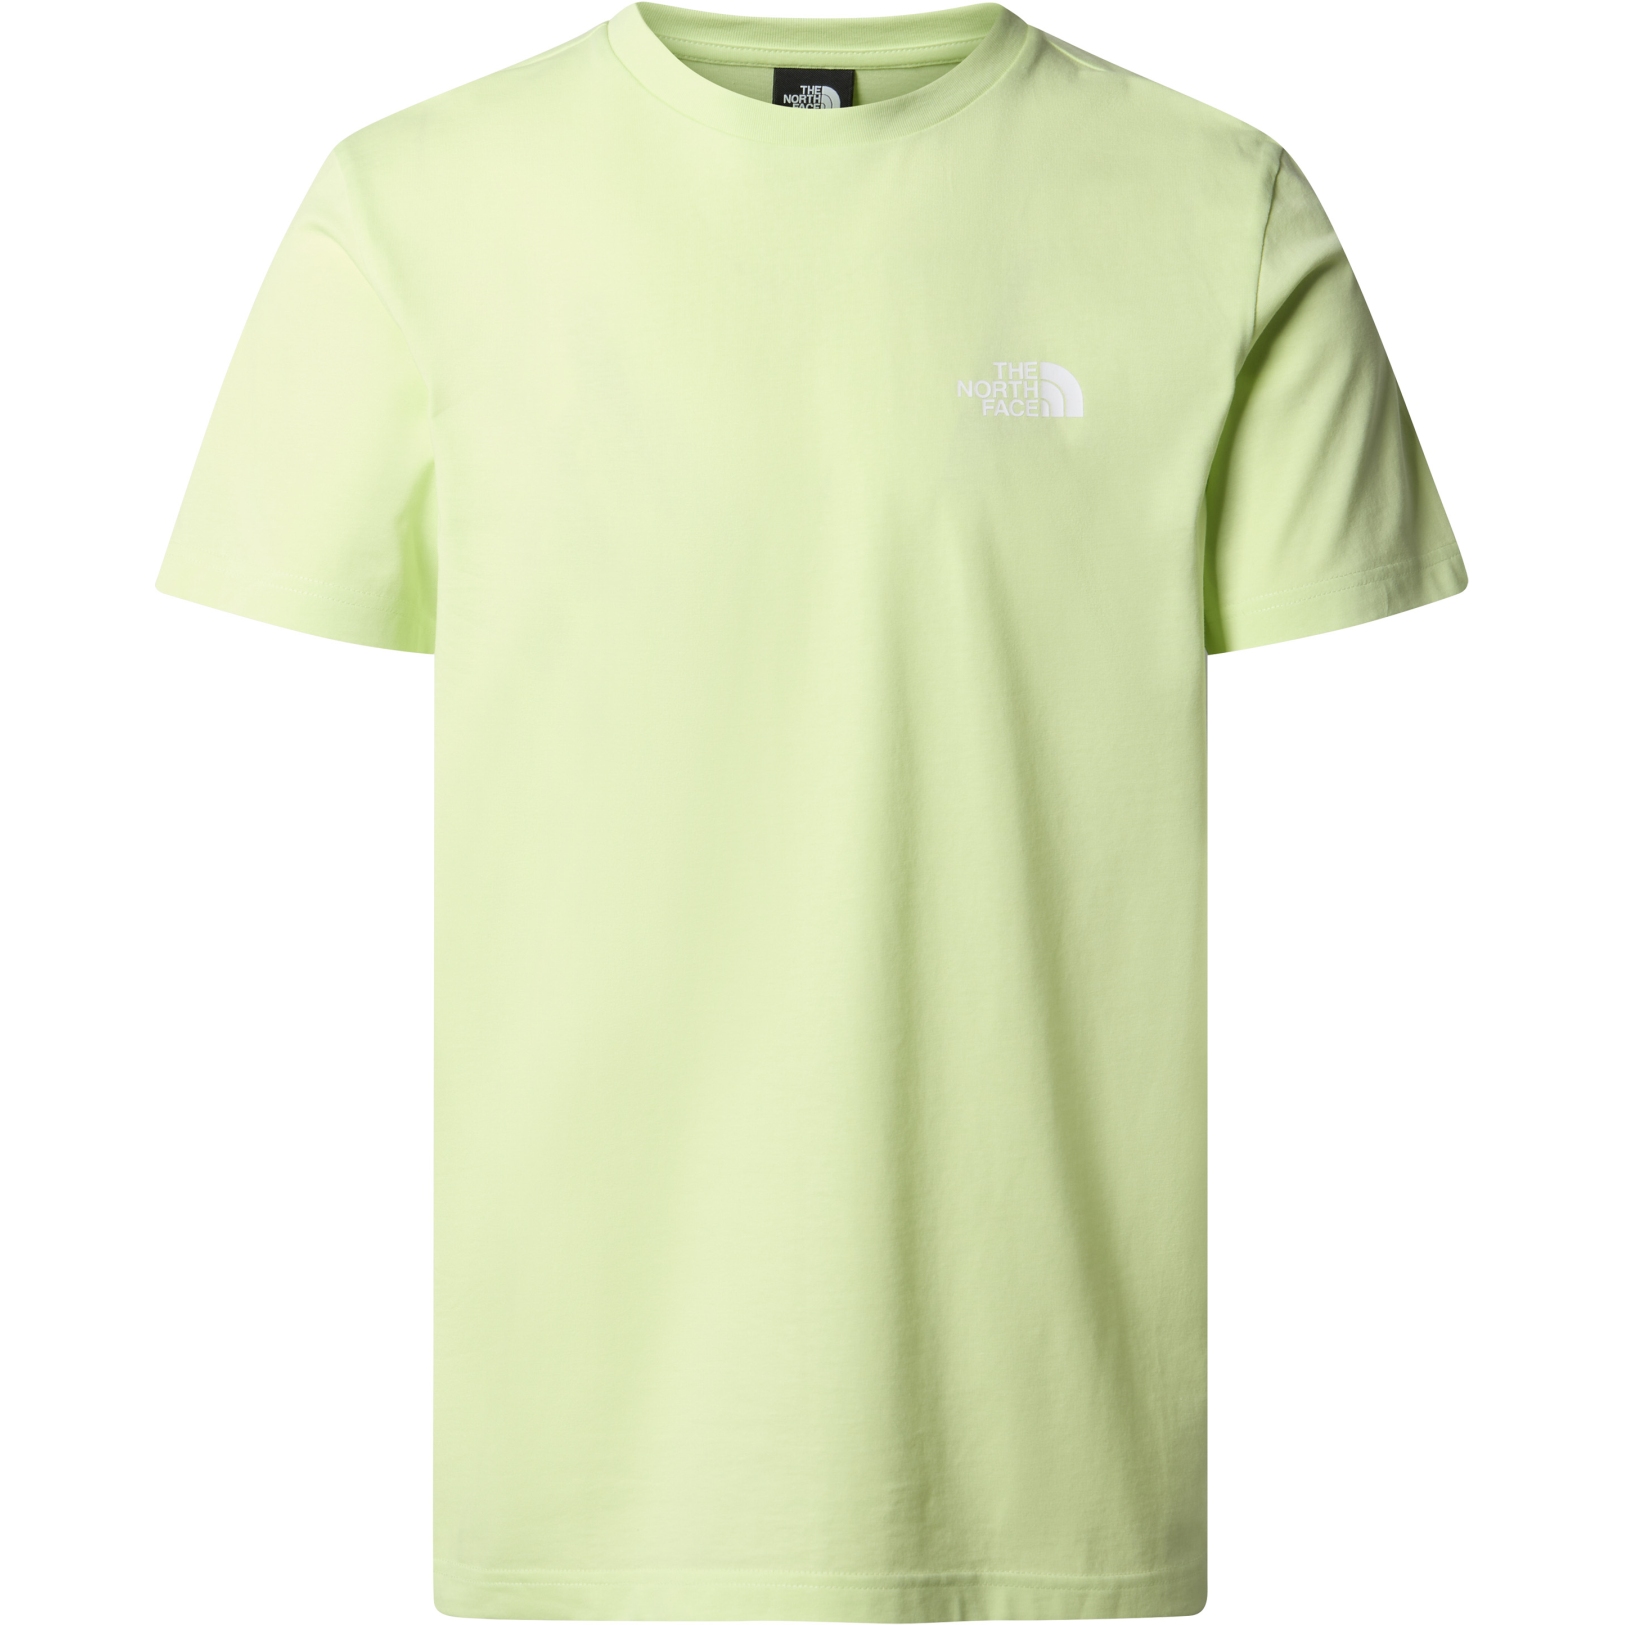 Foto de The North Face Camiseta Hombre - Simple Dome - Astro Lime